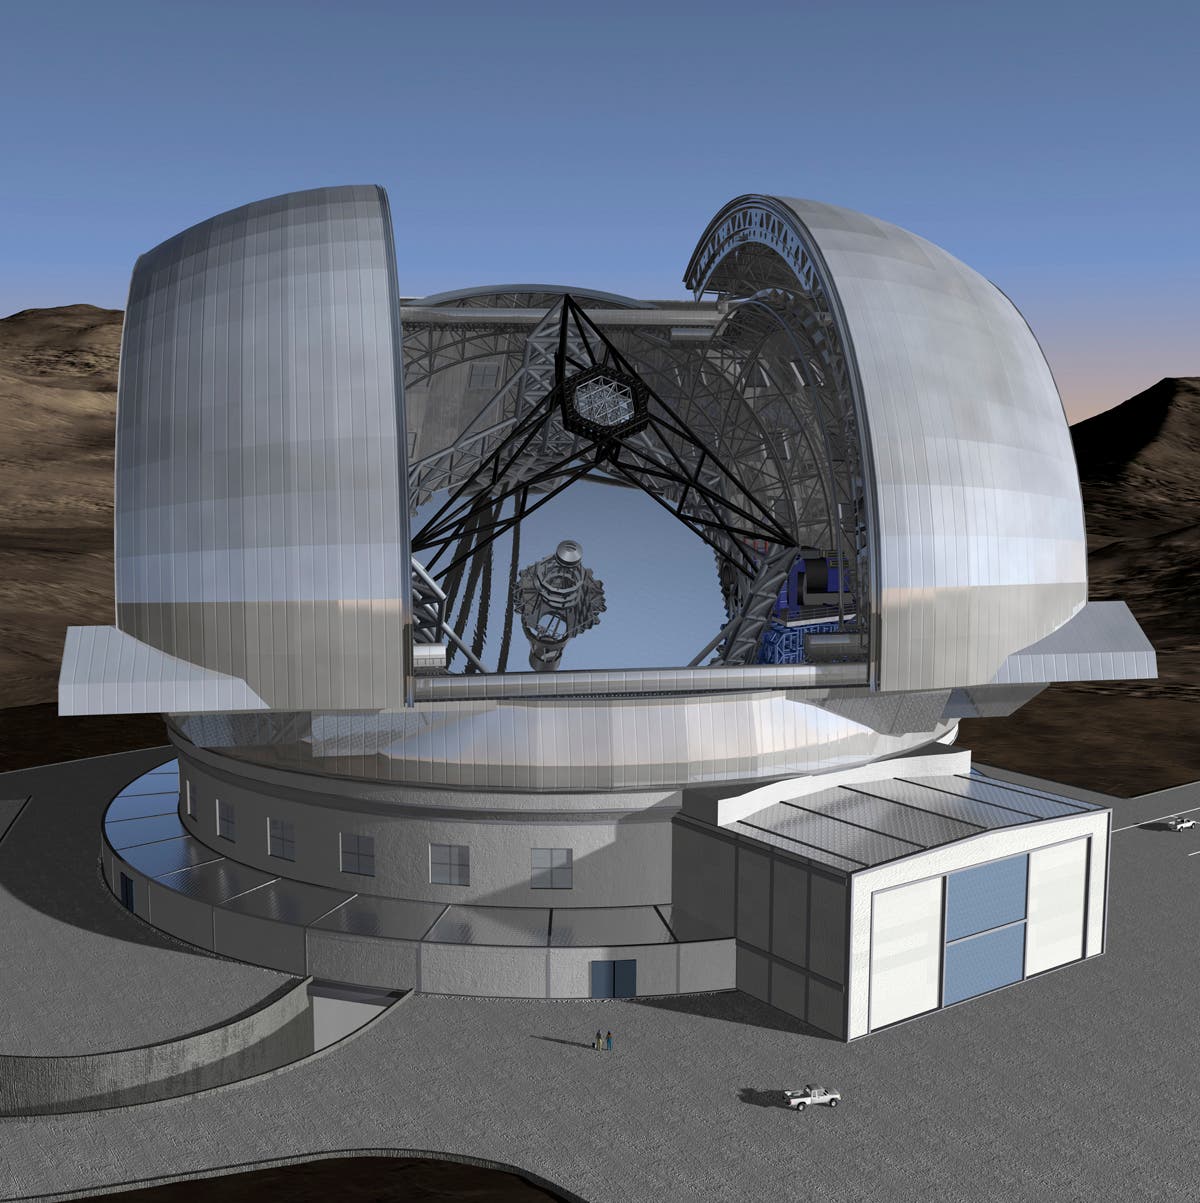 Das "European Extremely Large Telescope" (E-ELT)